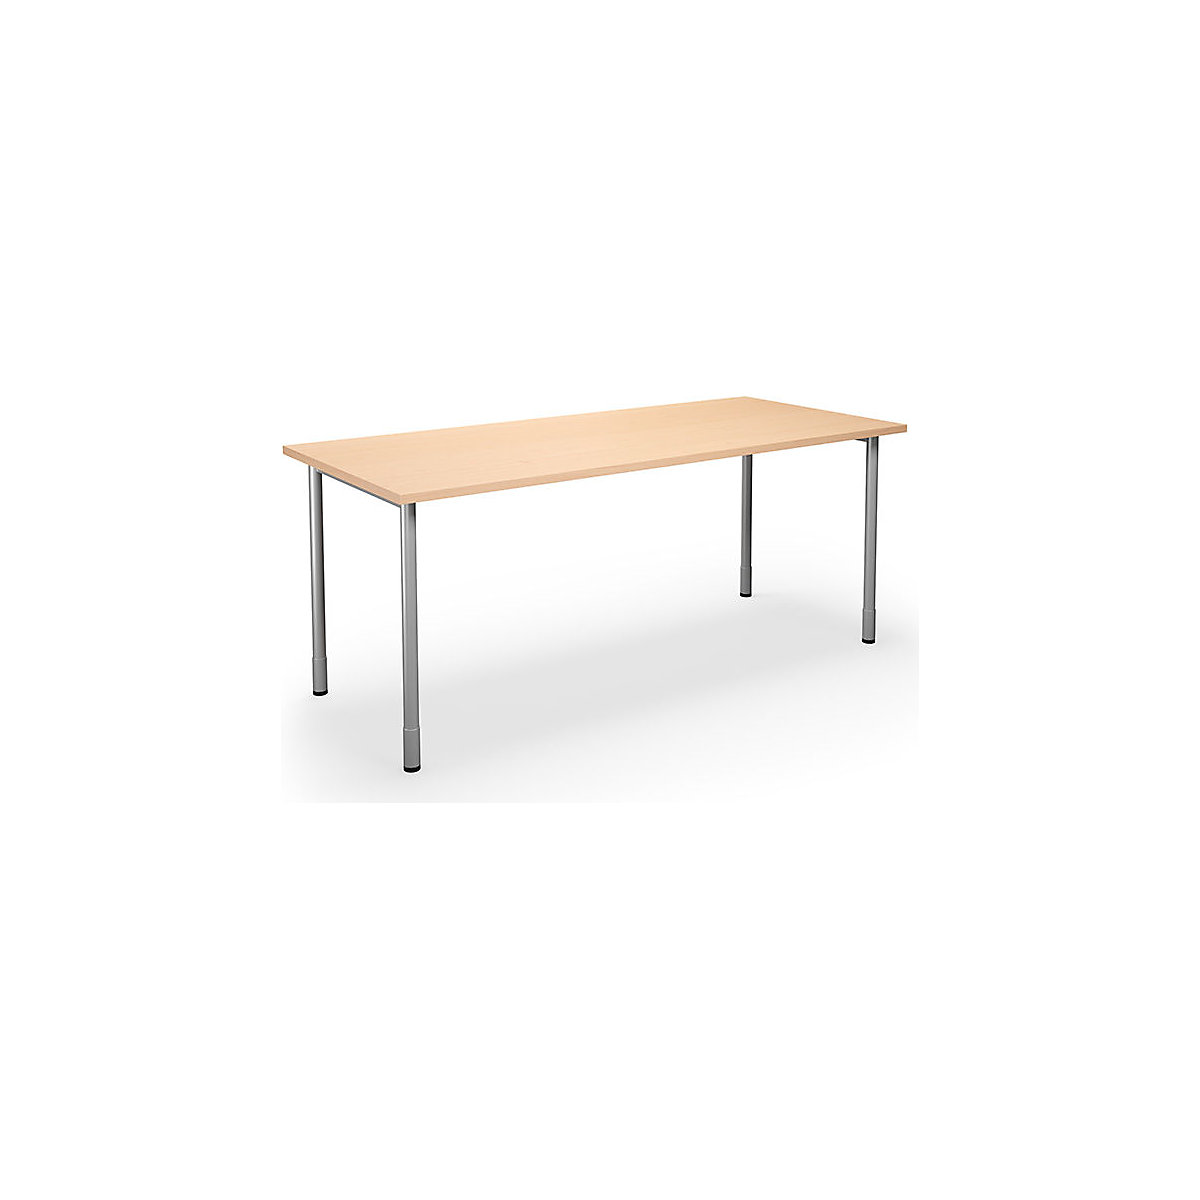 DUO-C multi-purpose desk, straight tabletop